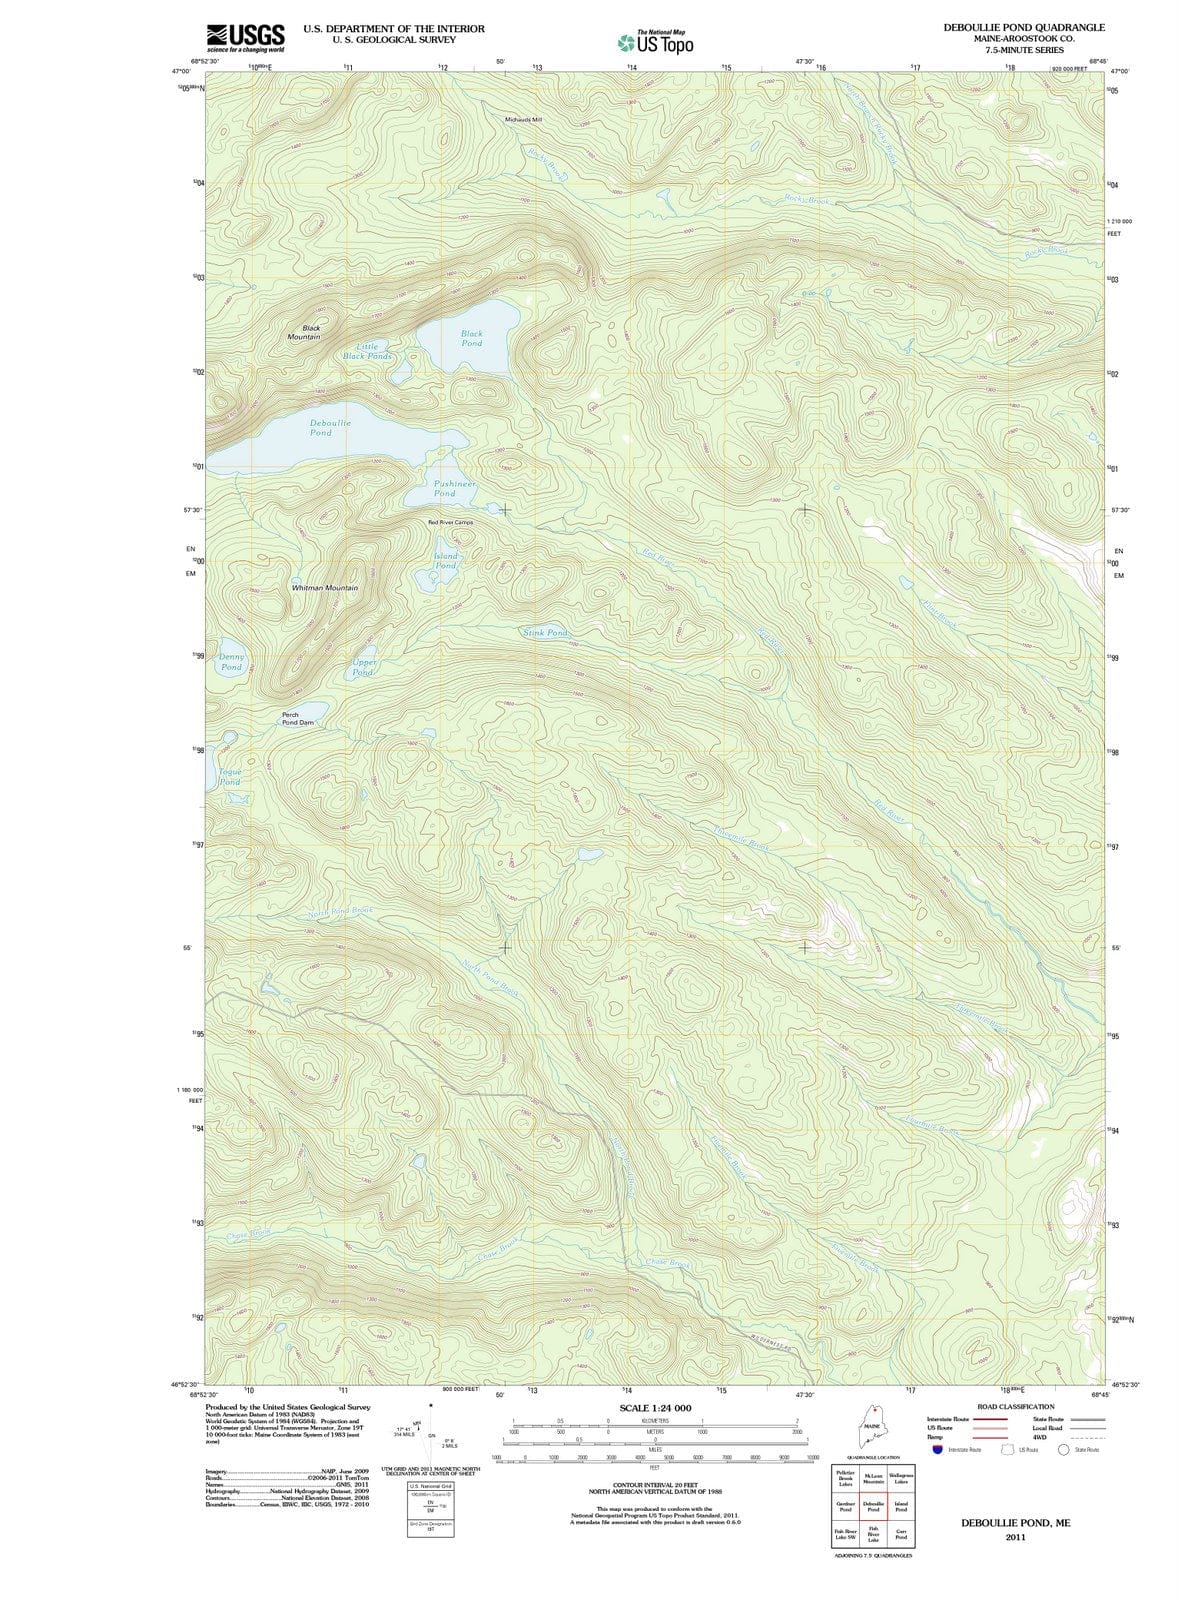 2011 Deboullie Pond, ME - Maine - USGS Topographic Map